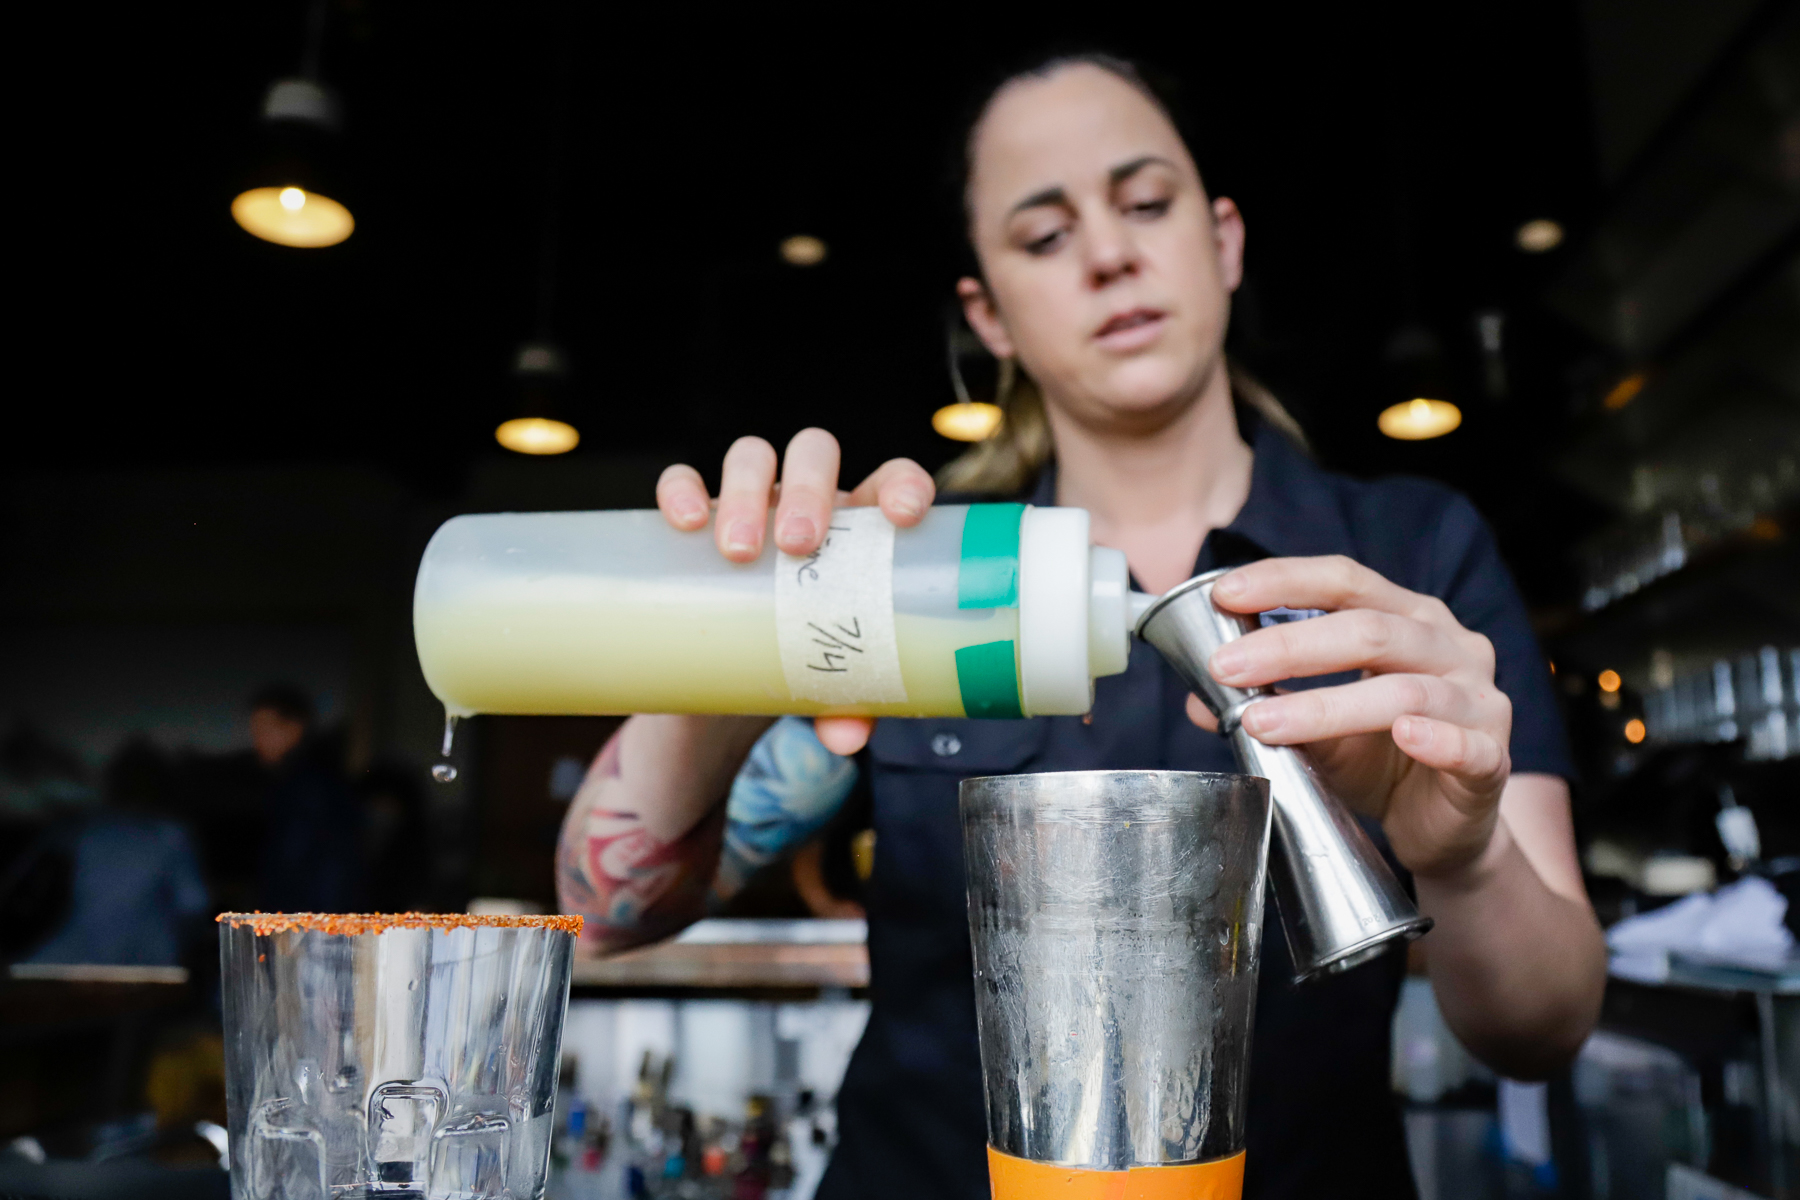 a person prepares a mixed drink at a restaurant bar